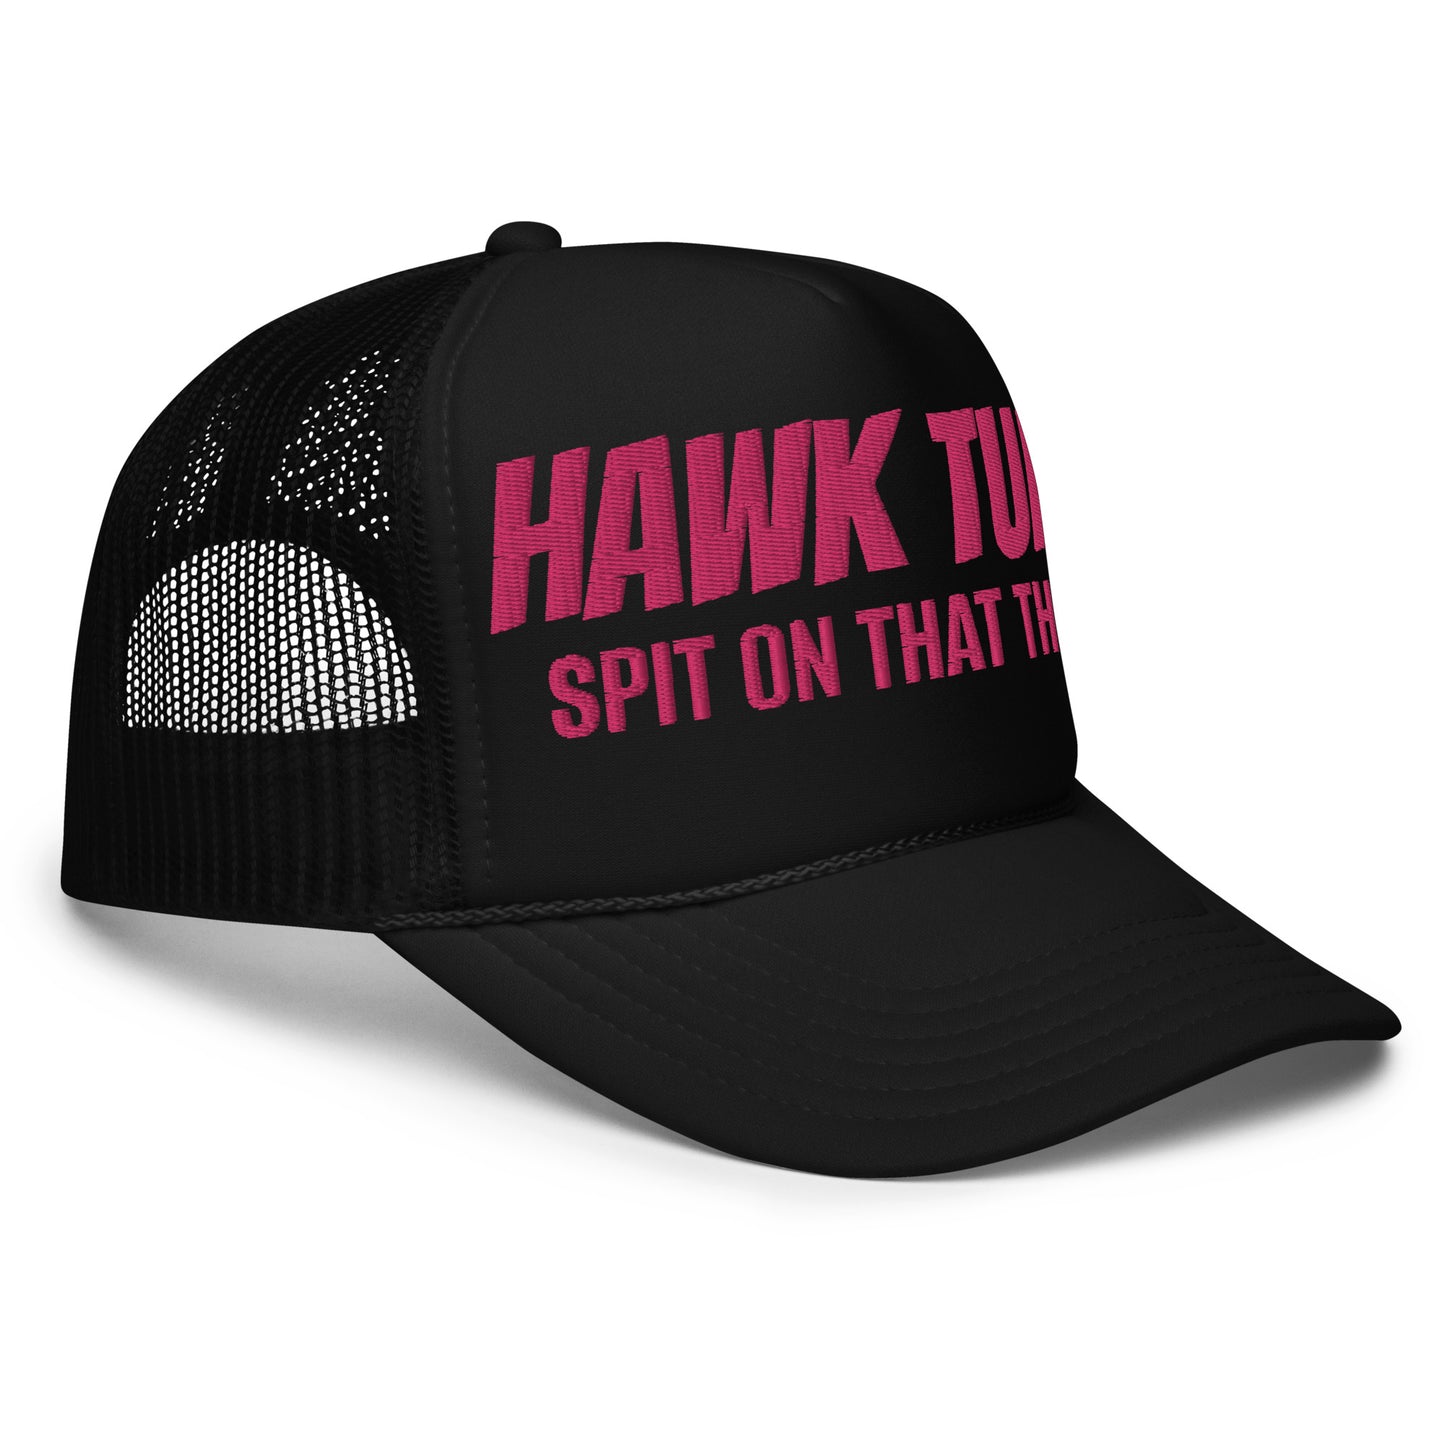 Hawk Tuah Black and Pink Unisex Embroidered Foam Trucker Hat